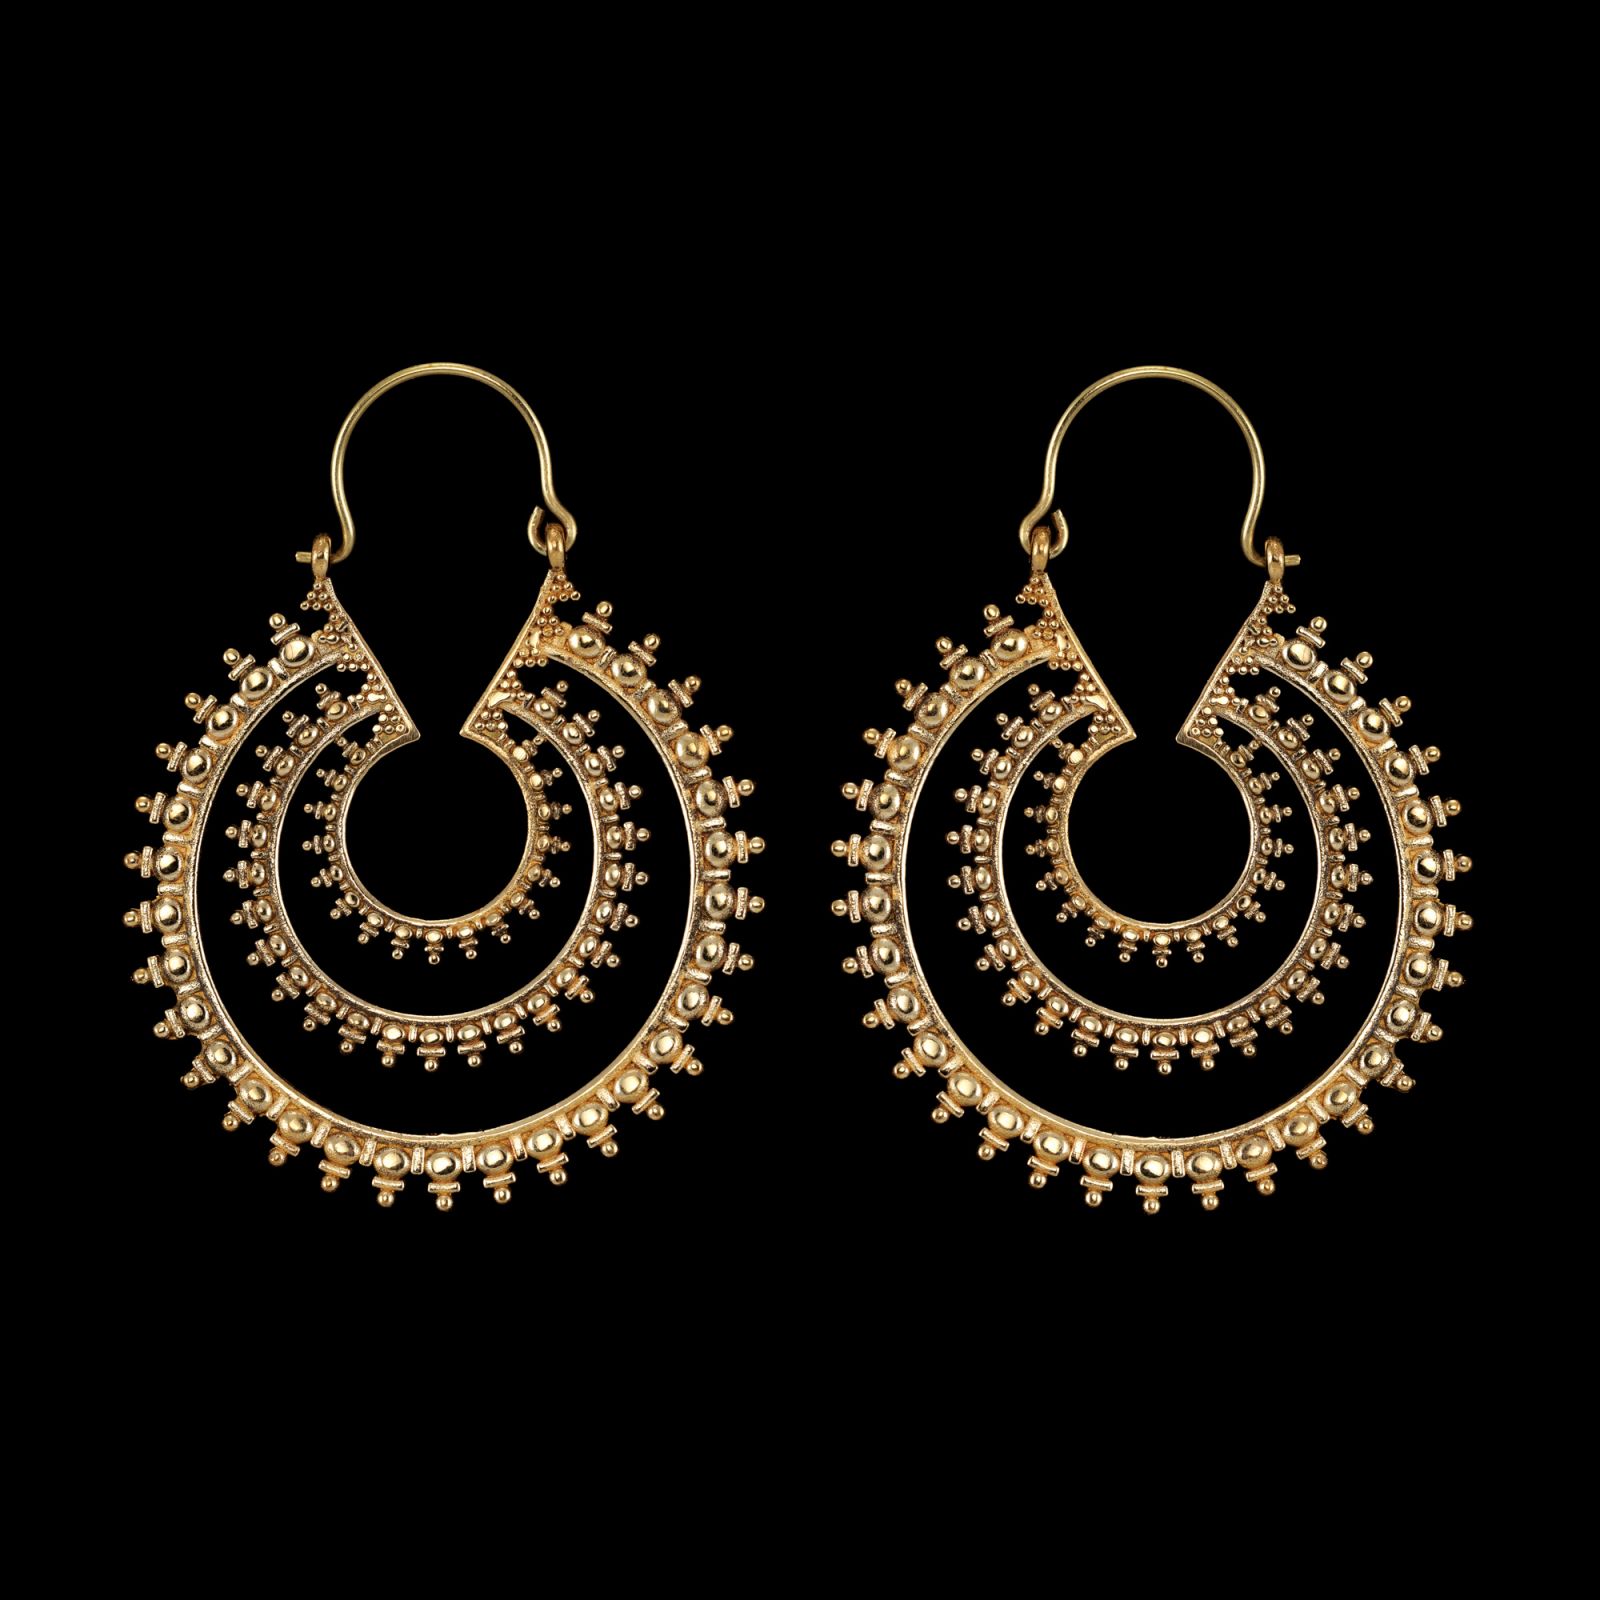 Brass earrings Anukam India